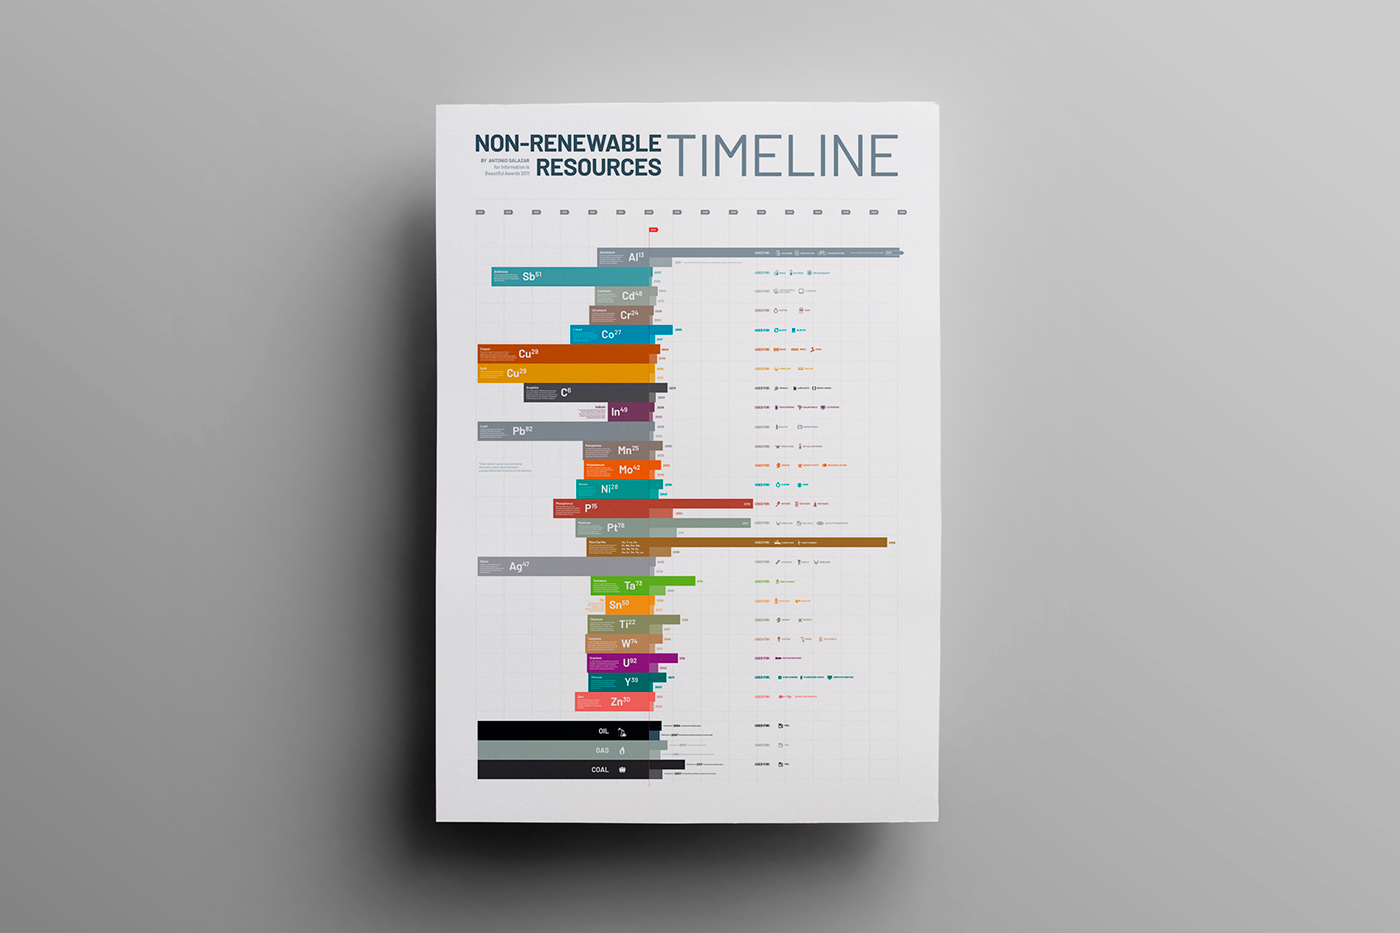 infography infografia stock check non-renewable resources timeline elements chemistry recursos no renovables Química elementos linea del tiempo